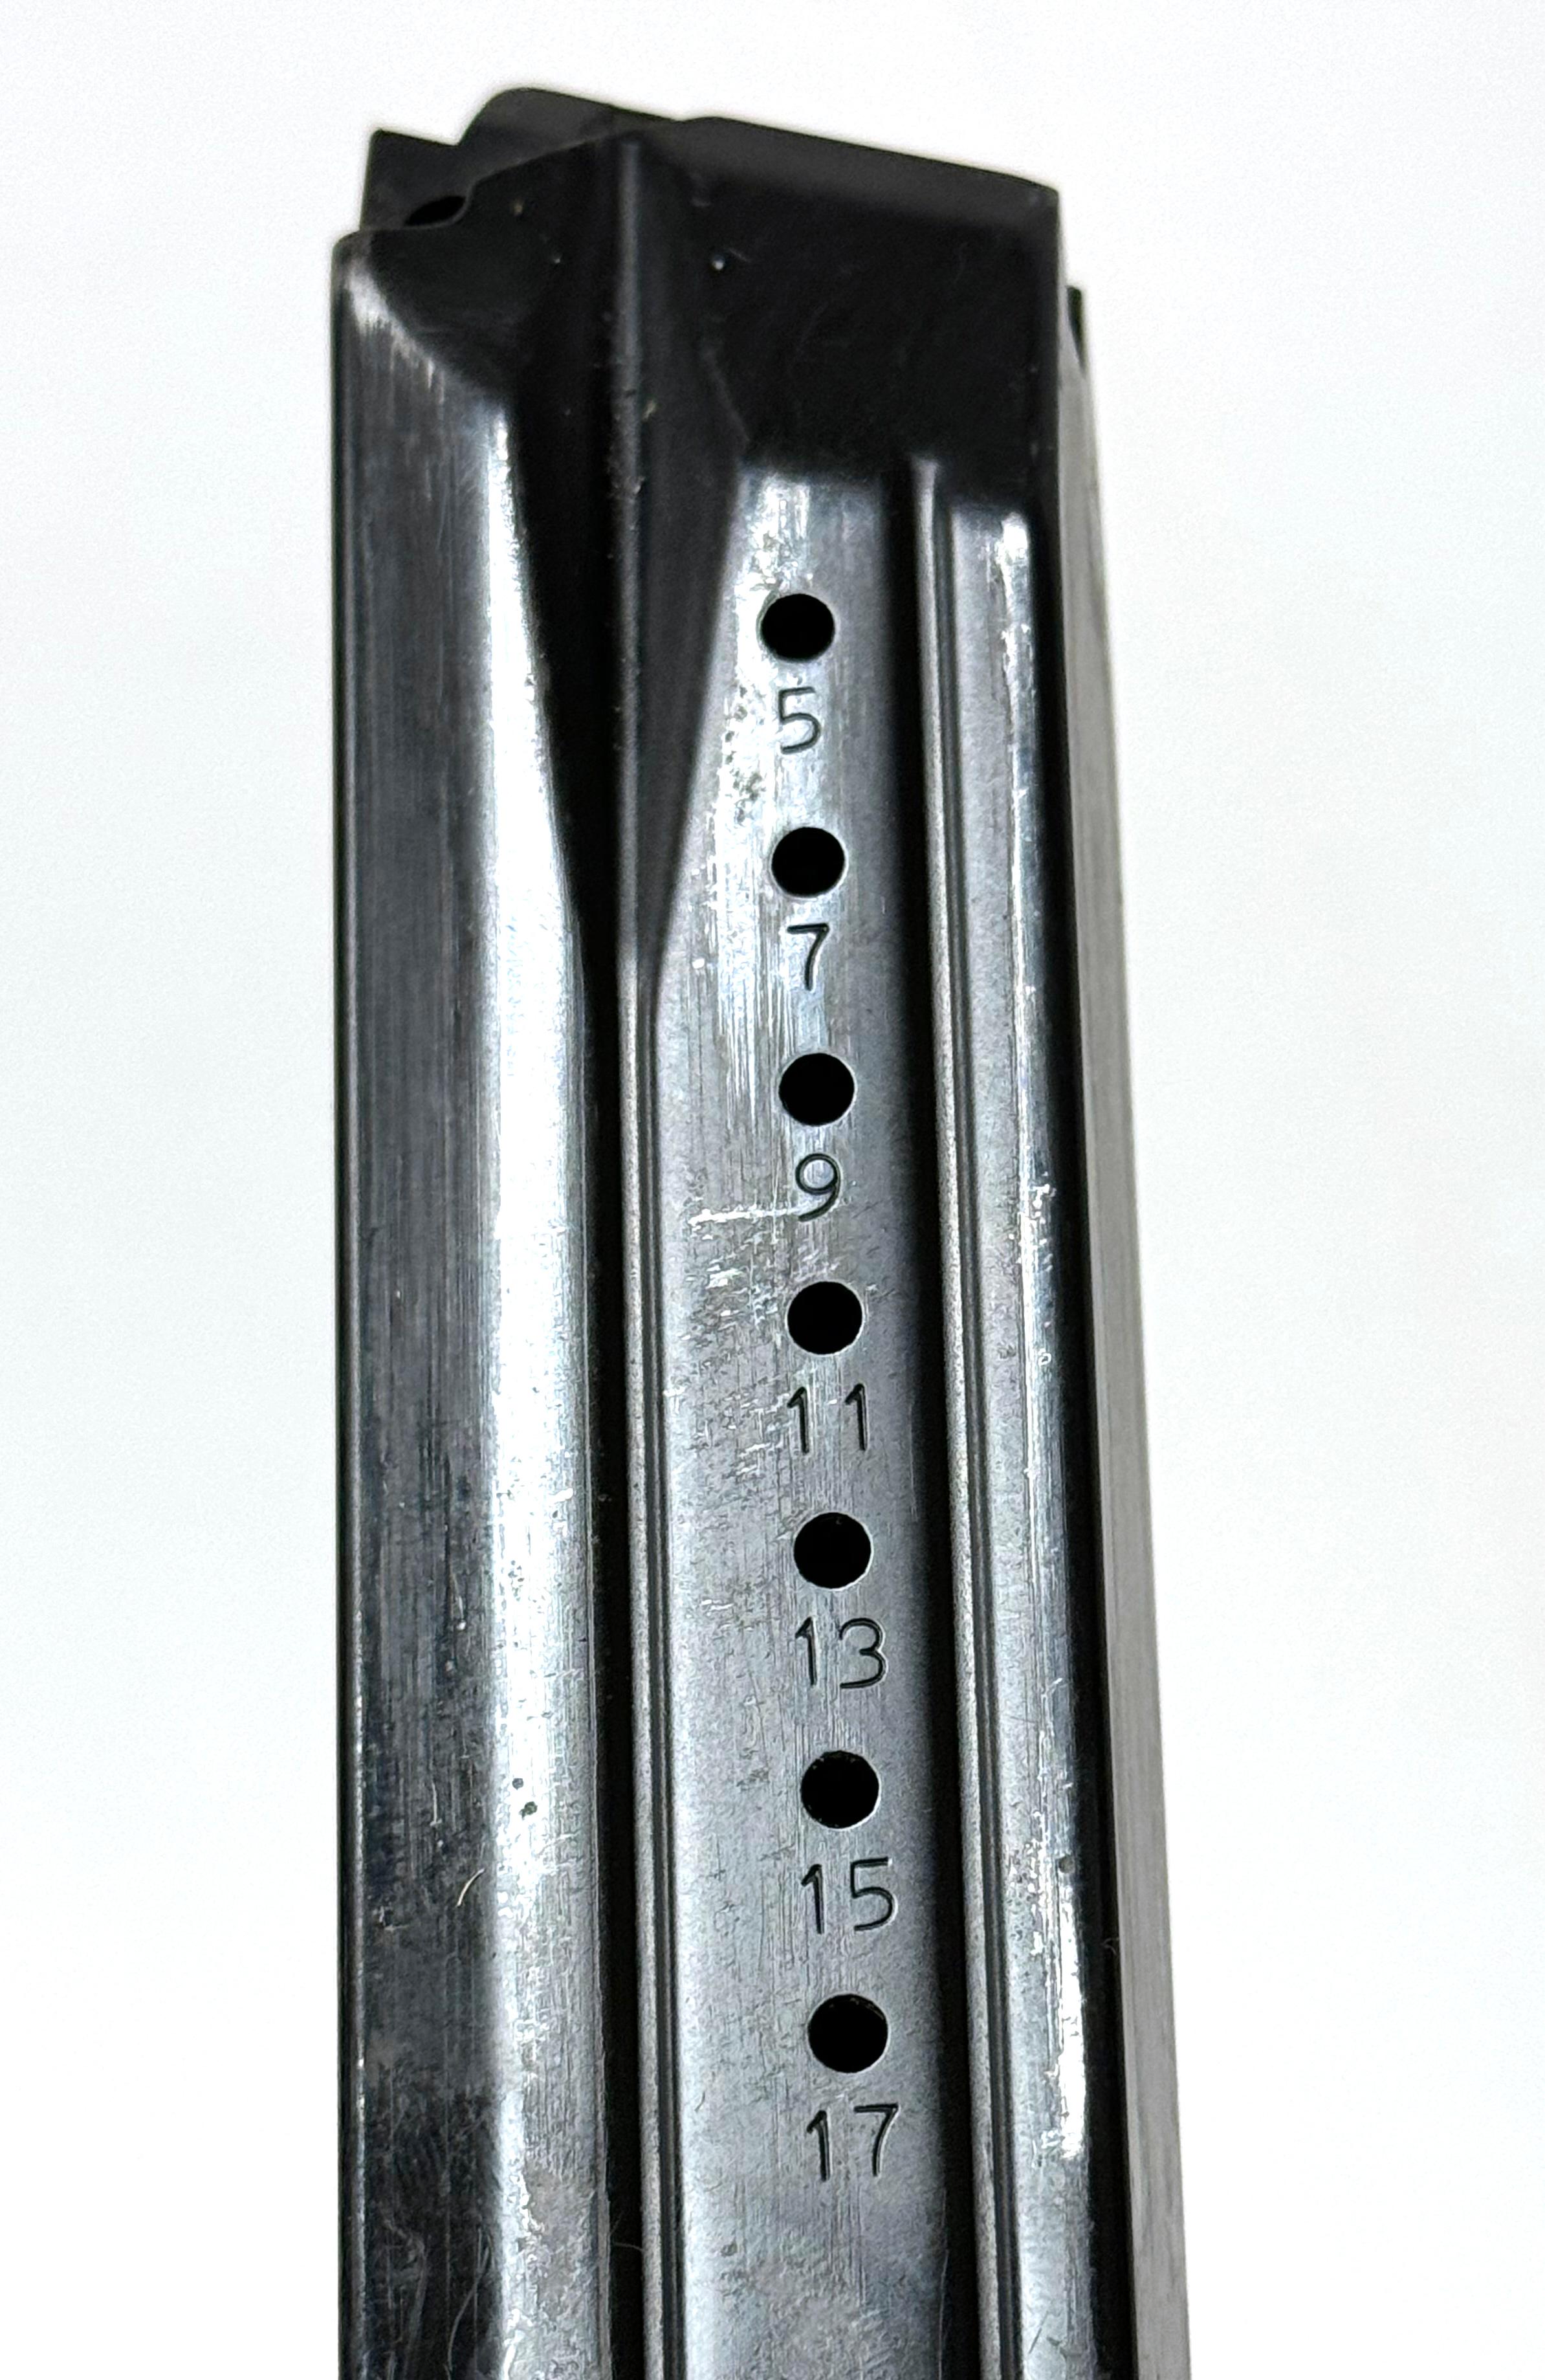 Ruger SR9c 9mm Semi-Automatic Pistol